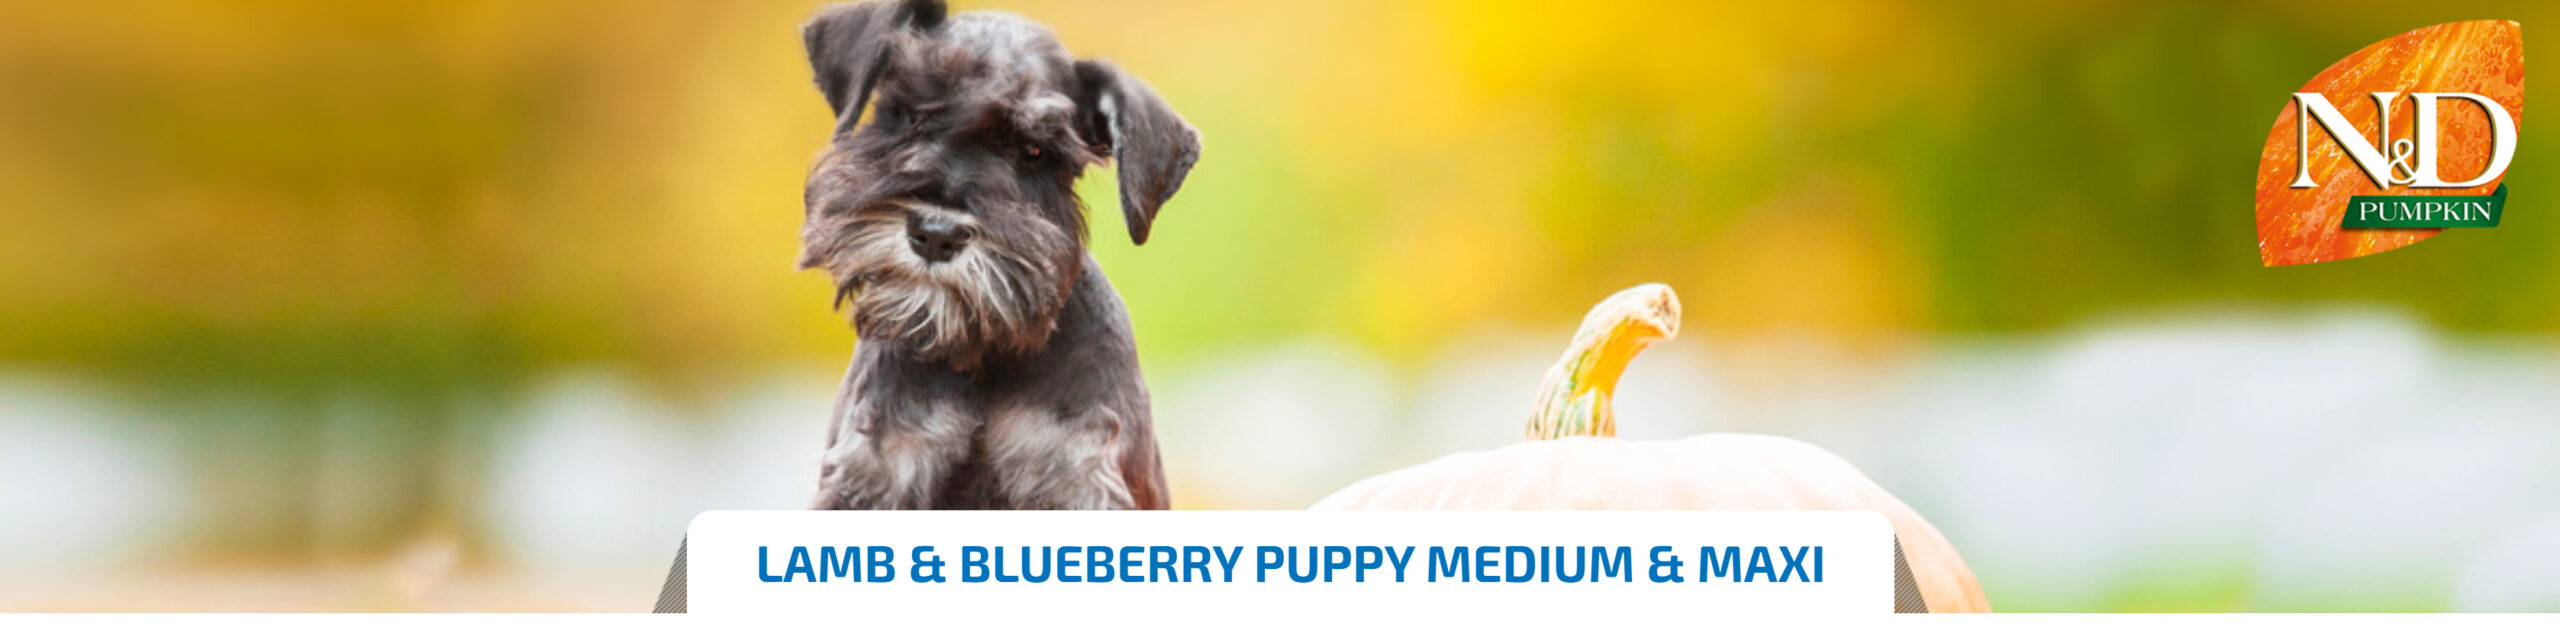 lamb blueberry puppy medium maxi long scaled